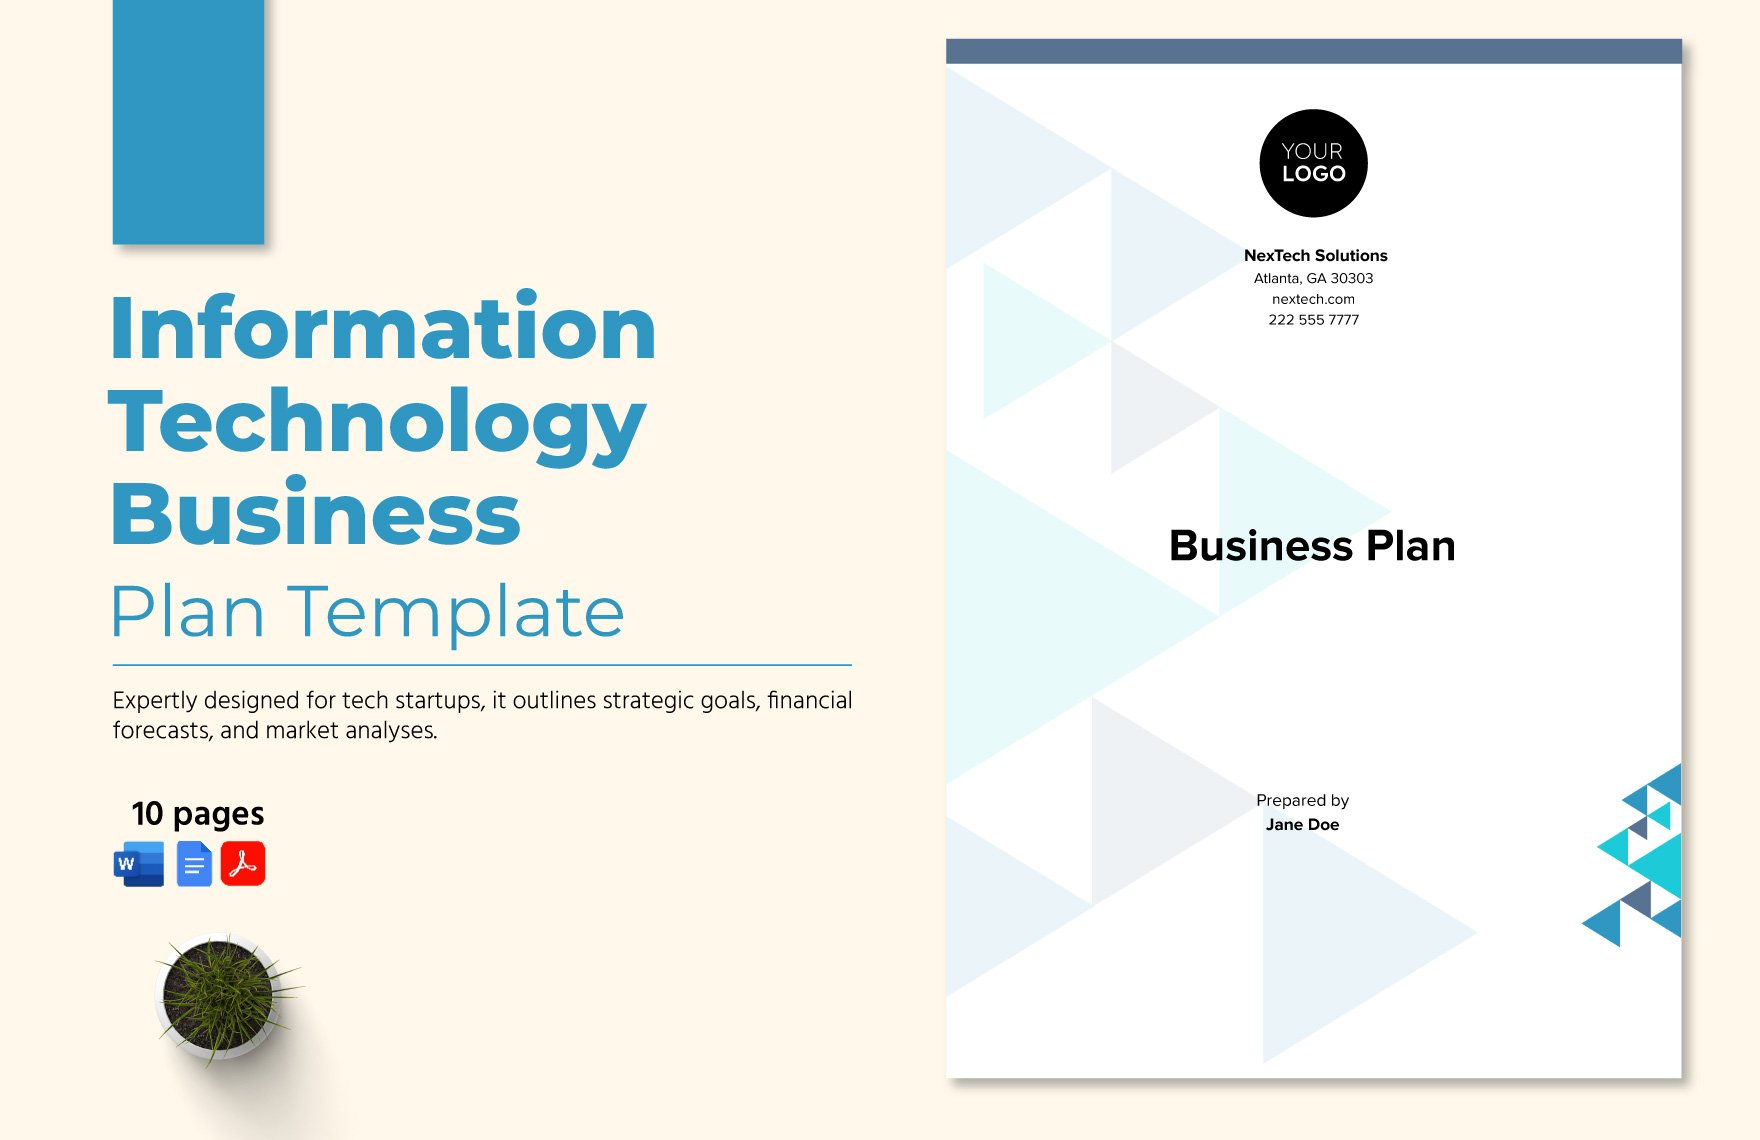 Information Technology Business Plan Template